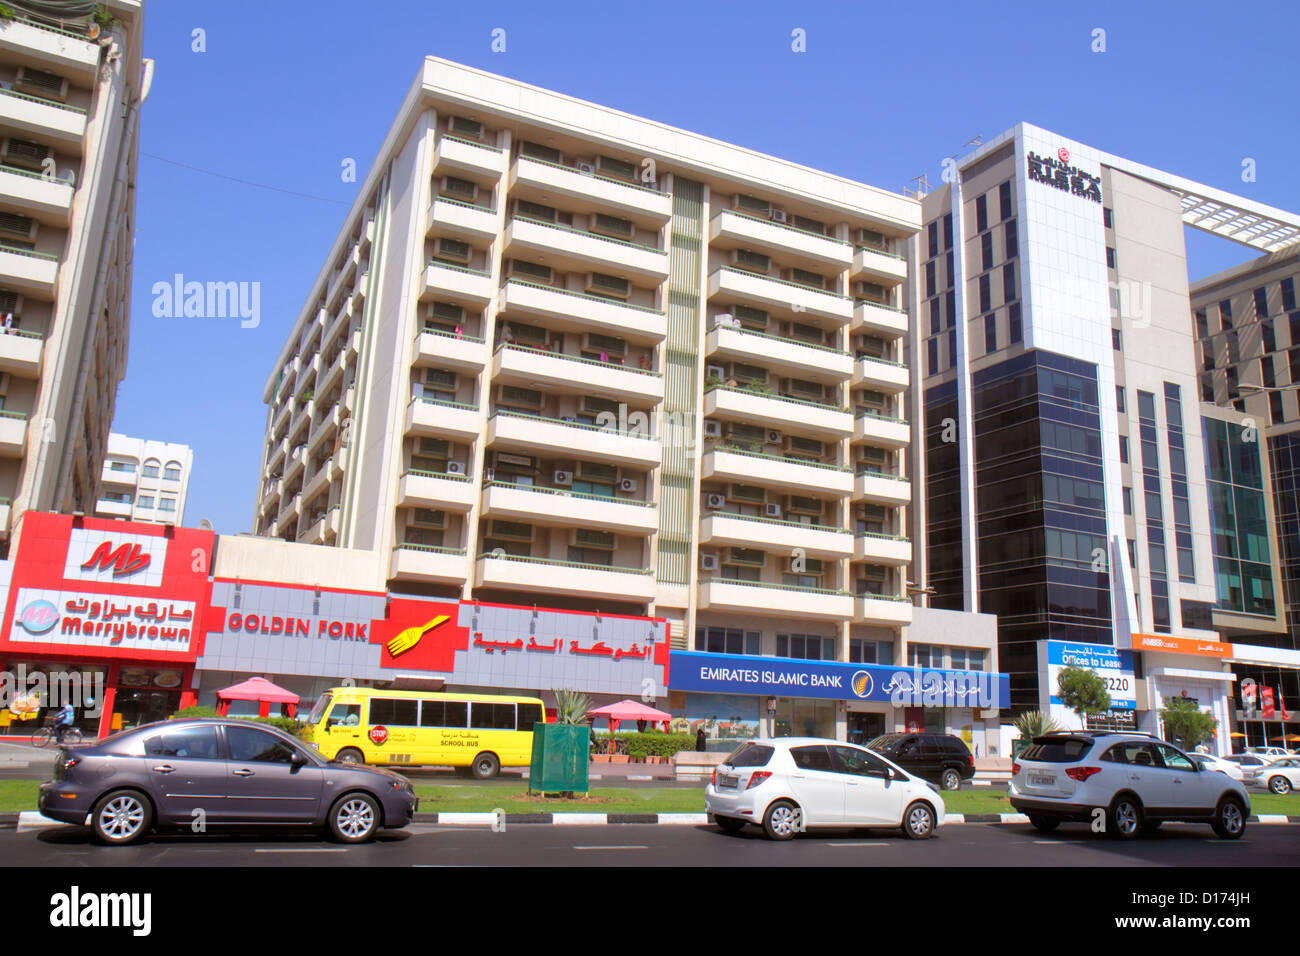 Dubai UAE,United Arab Emirates,Deira,Al Rigga,Al Maktoum Road,street scene,businesses,district,buildings,city skyline,school bus,coach,English,Arabic, Stock Photo